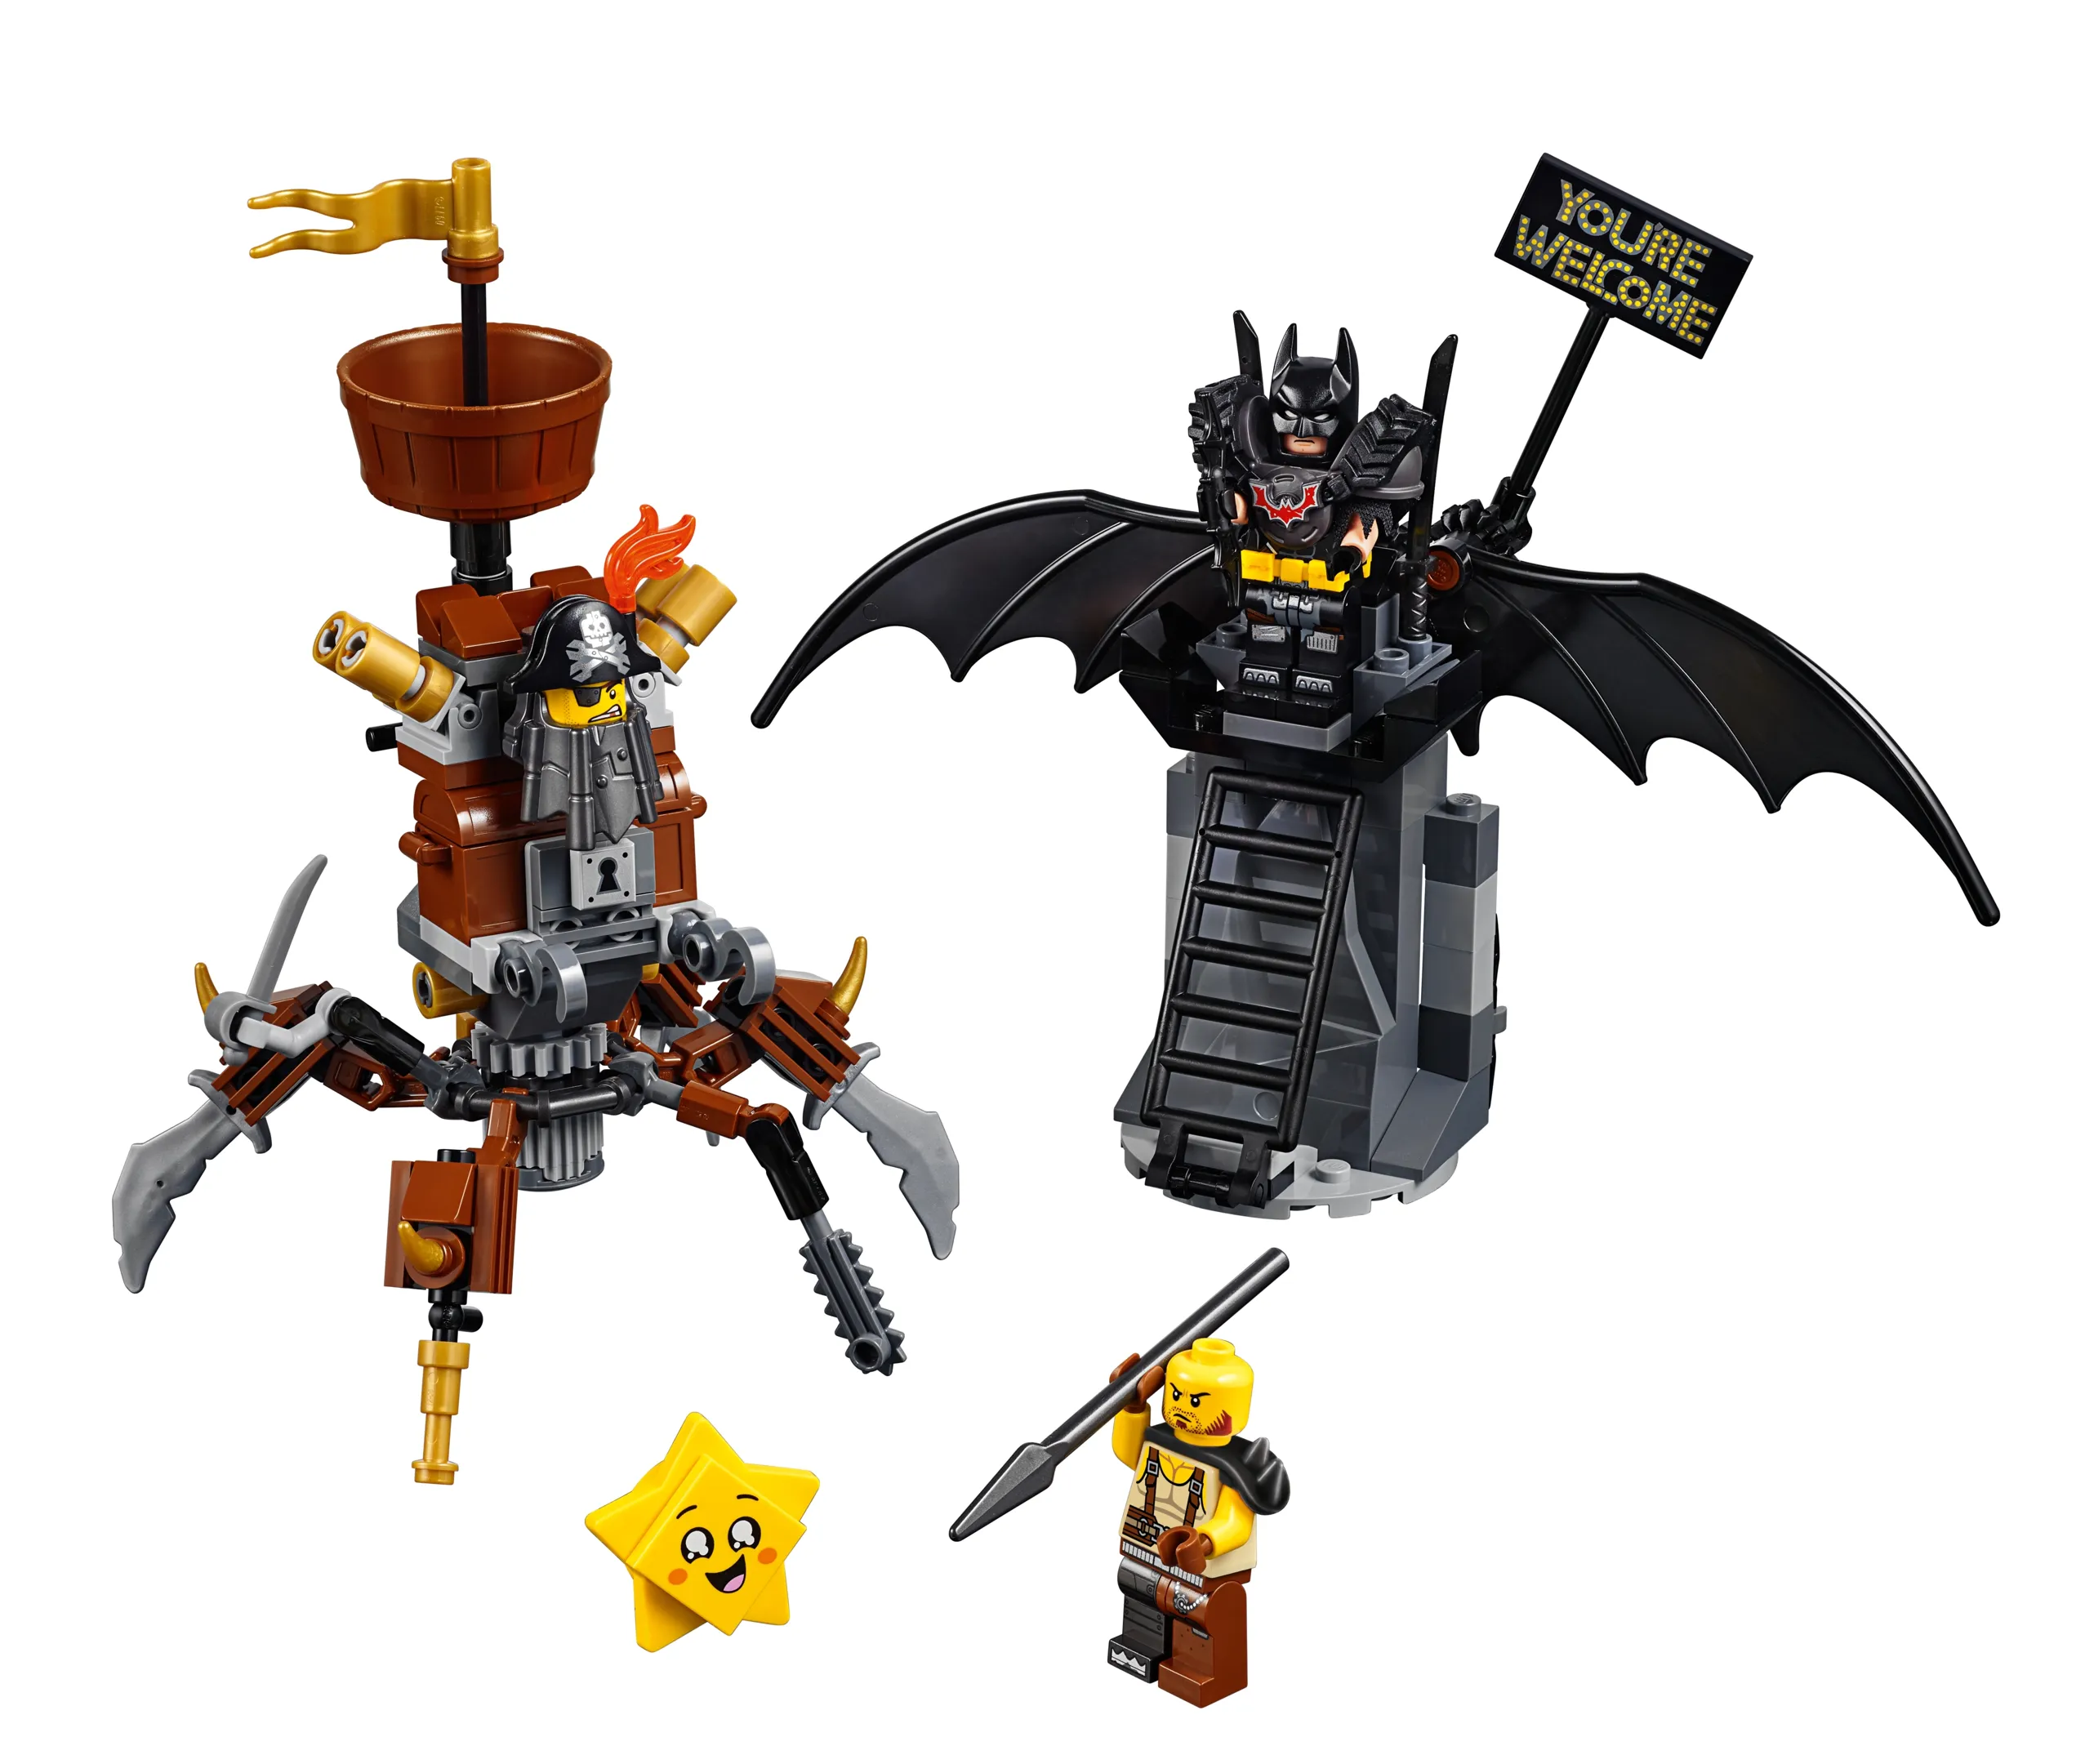 Lego MINIFIGURE Batman - Battle Ready, Tire Armor, Tattered Cape, Yellow  Utility Belt